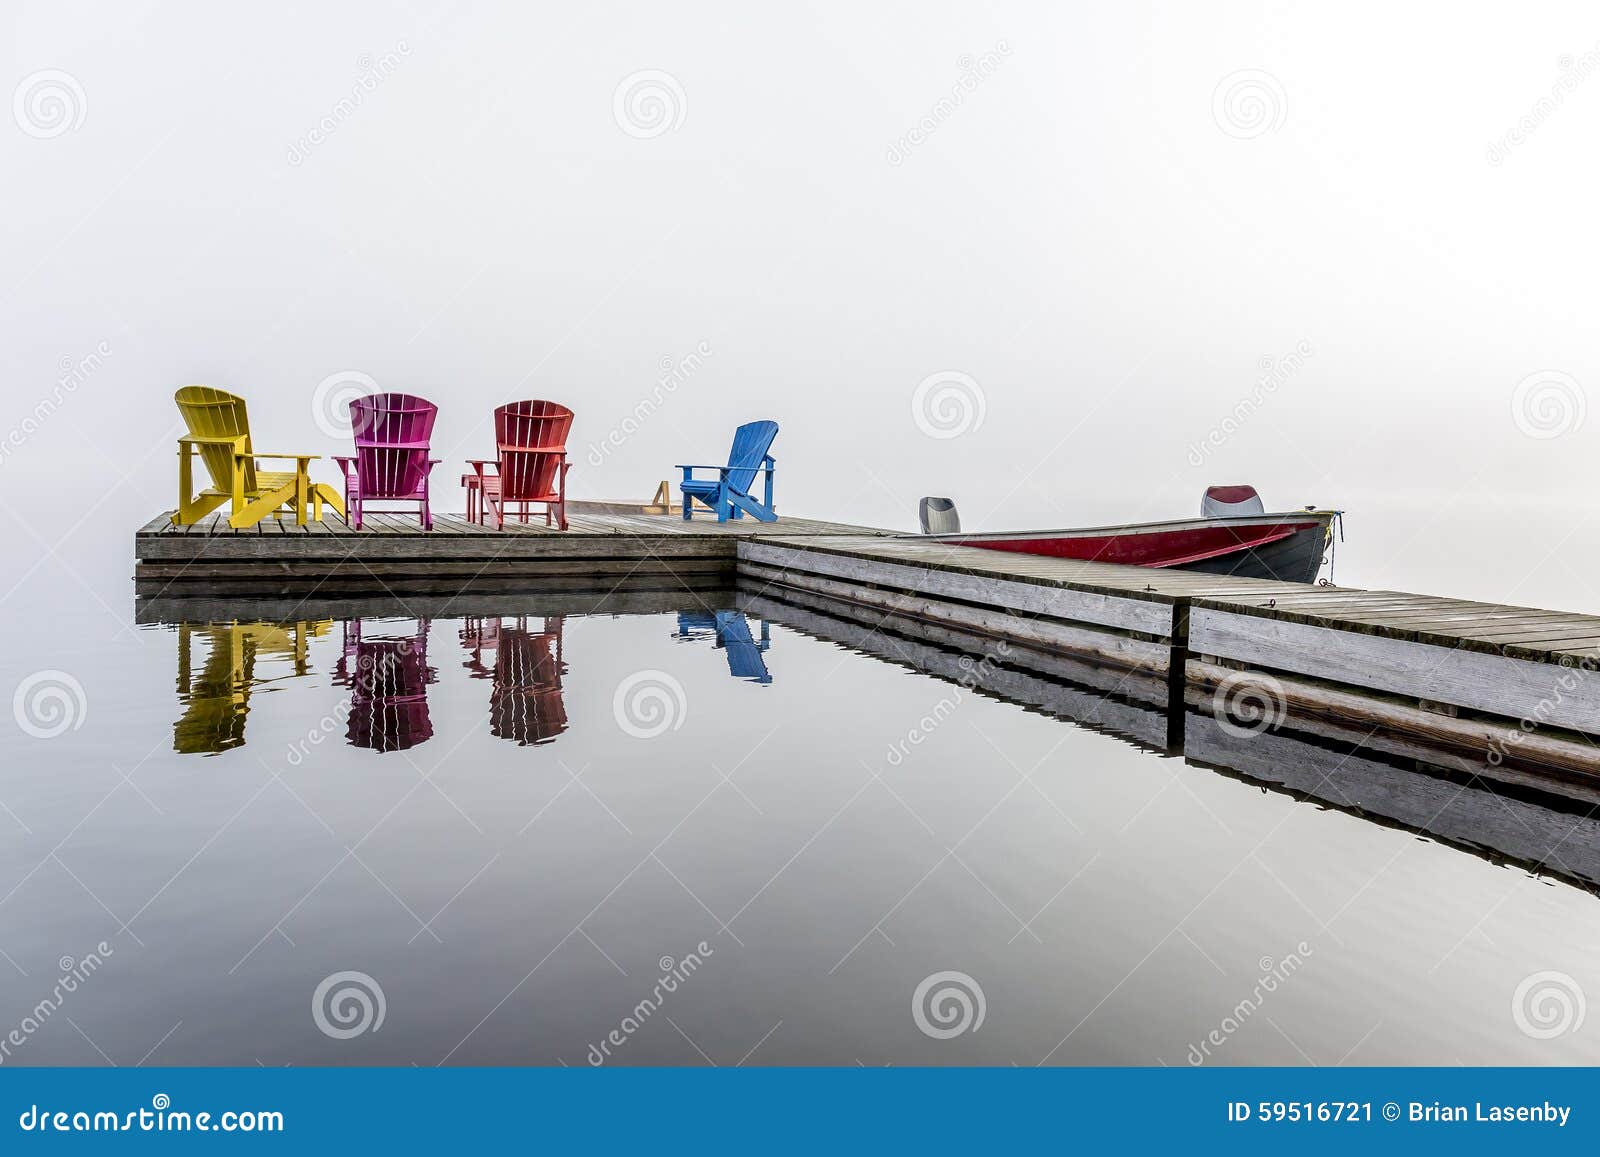 colorful muskoka chairs on a dock